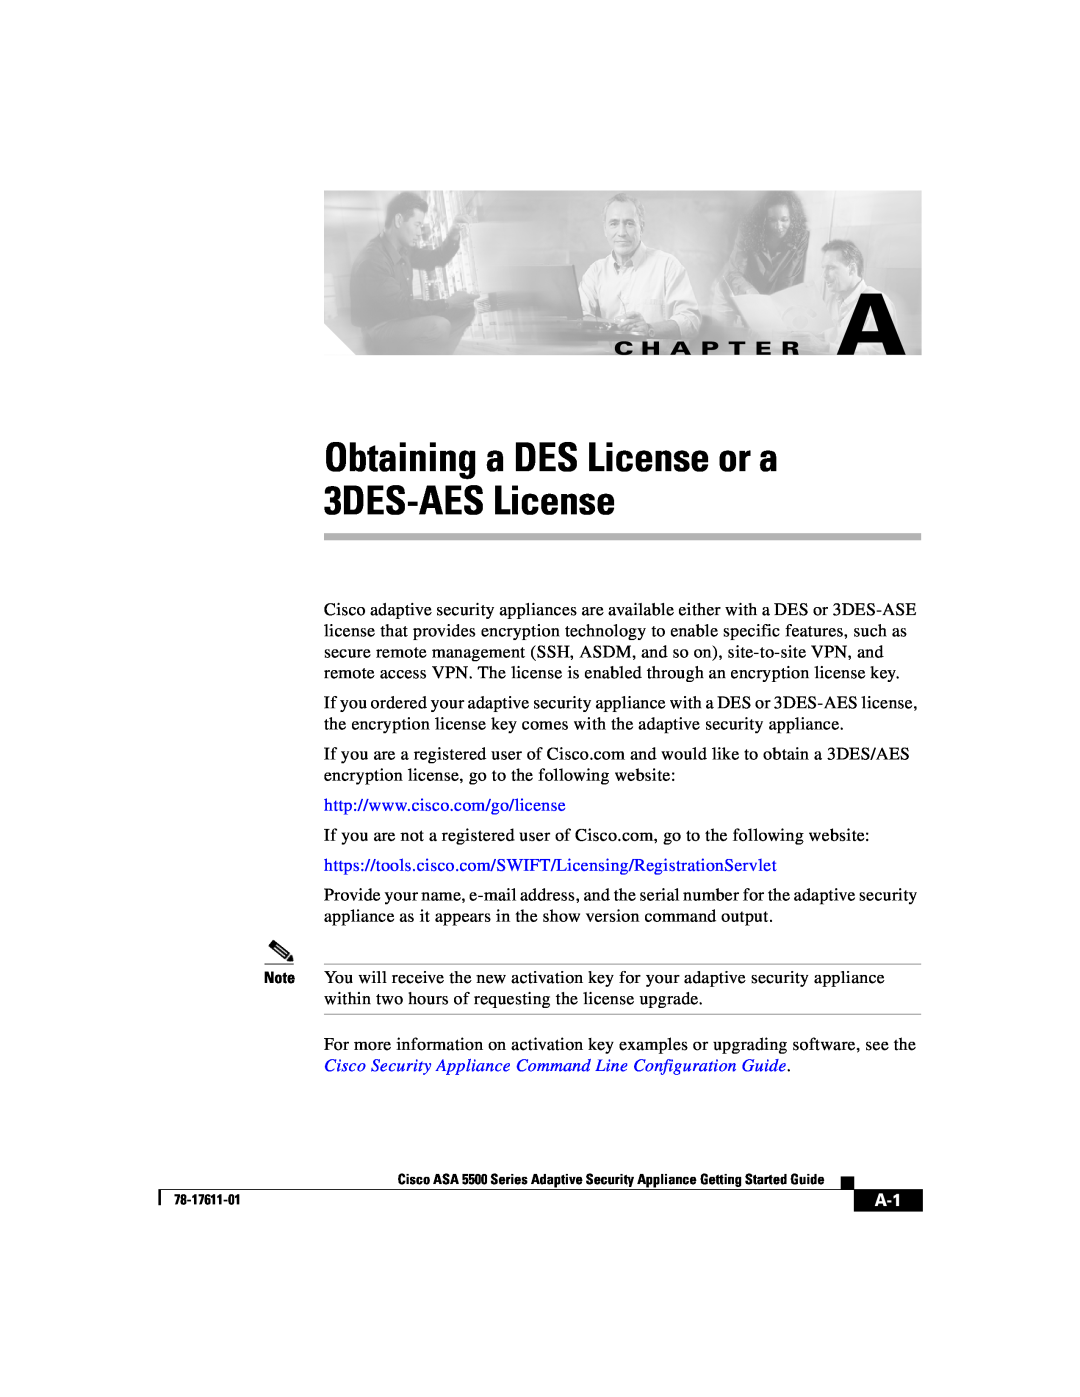 Cisco Systems ASA 5500 manual Obtaining a DES License or a 3DES-AESLicense, C H A P T E R A 